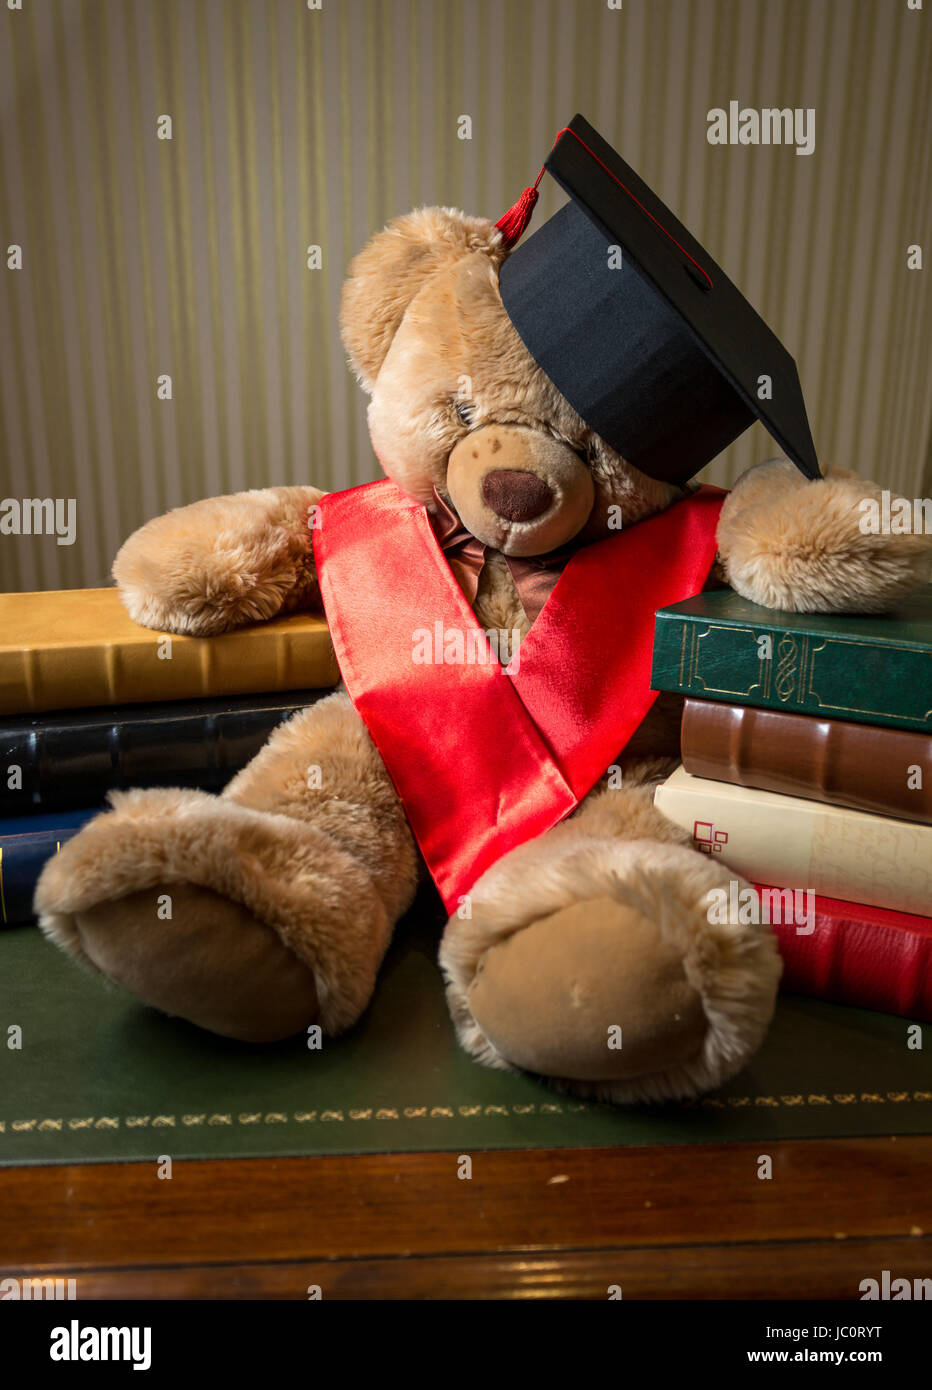 Closeup photo of brown teddy bear wearing graduation cap leaning on books Stock Photo